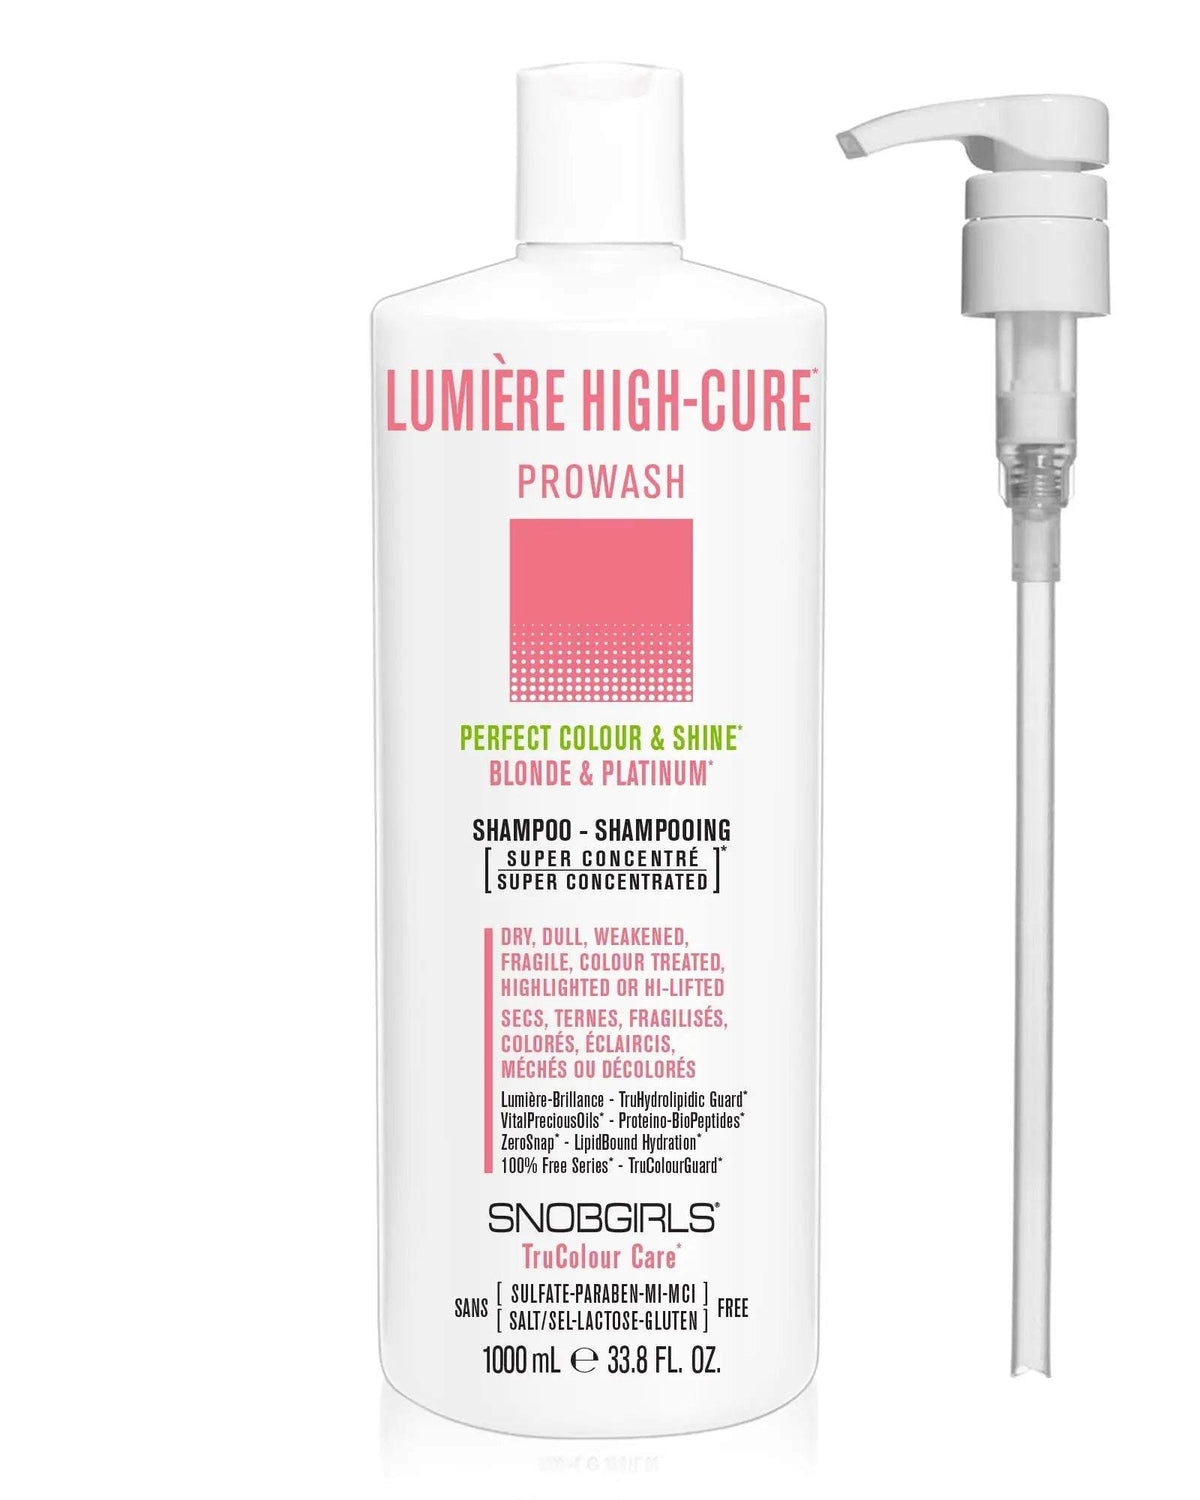 LUMIERE HIGHCURE Prowash (shampoo) 33.8 FL. OZ. + Pump - SNOBGIRLS.com